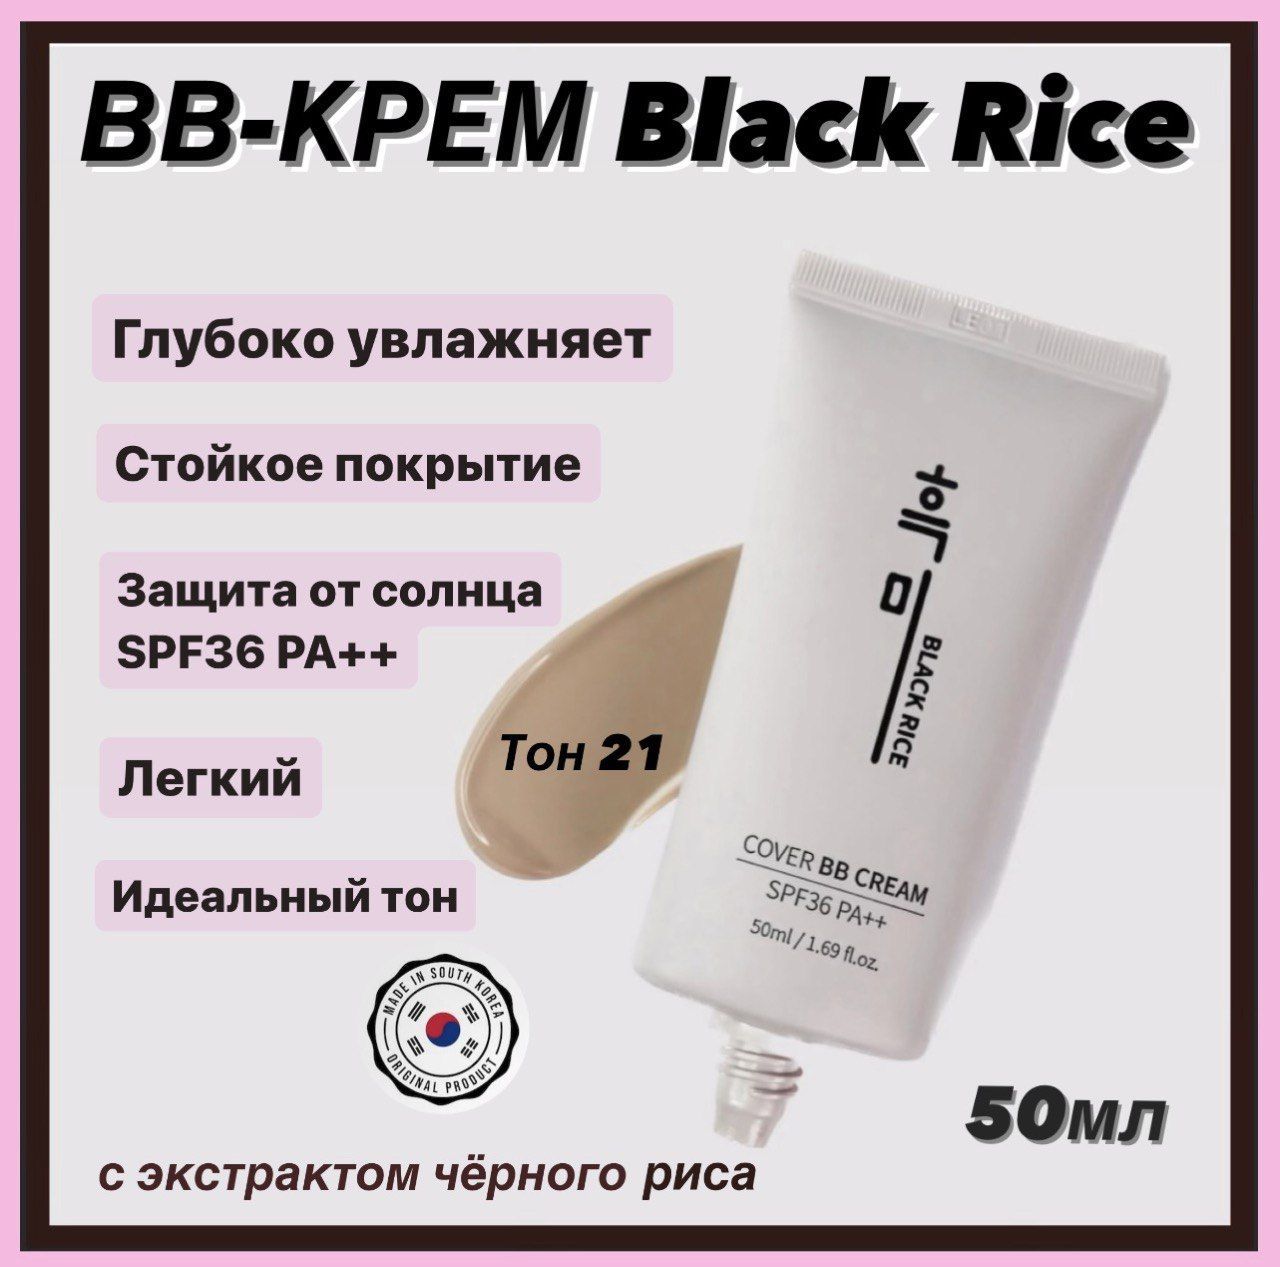 Cover BB Cream spf36 Black Rice. Black Rice Cover BB Cream SPF 36 pa. Black Rice BB Cream. Cover bb cream black rice